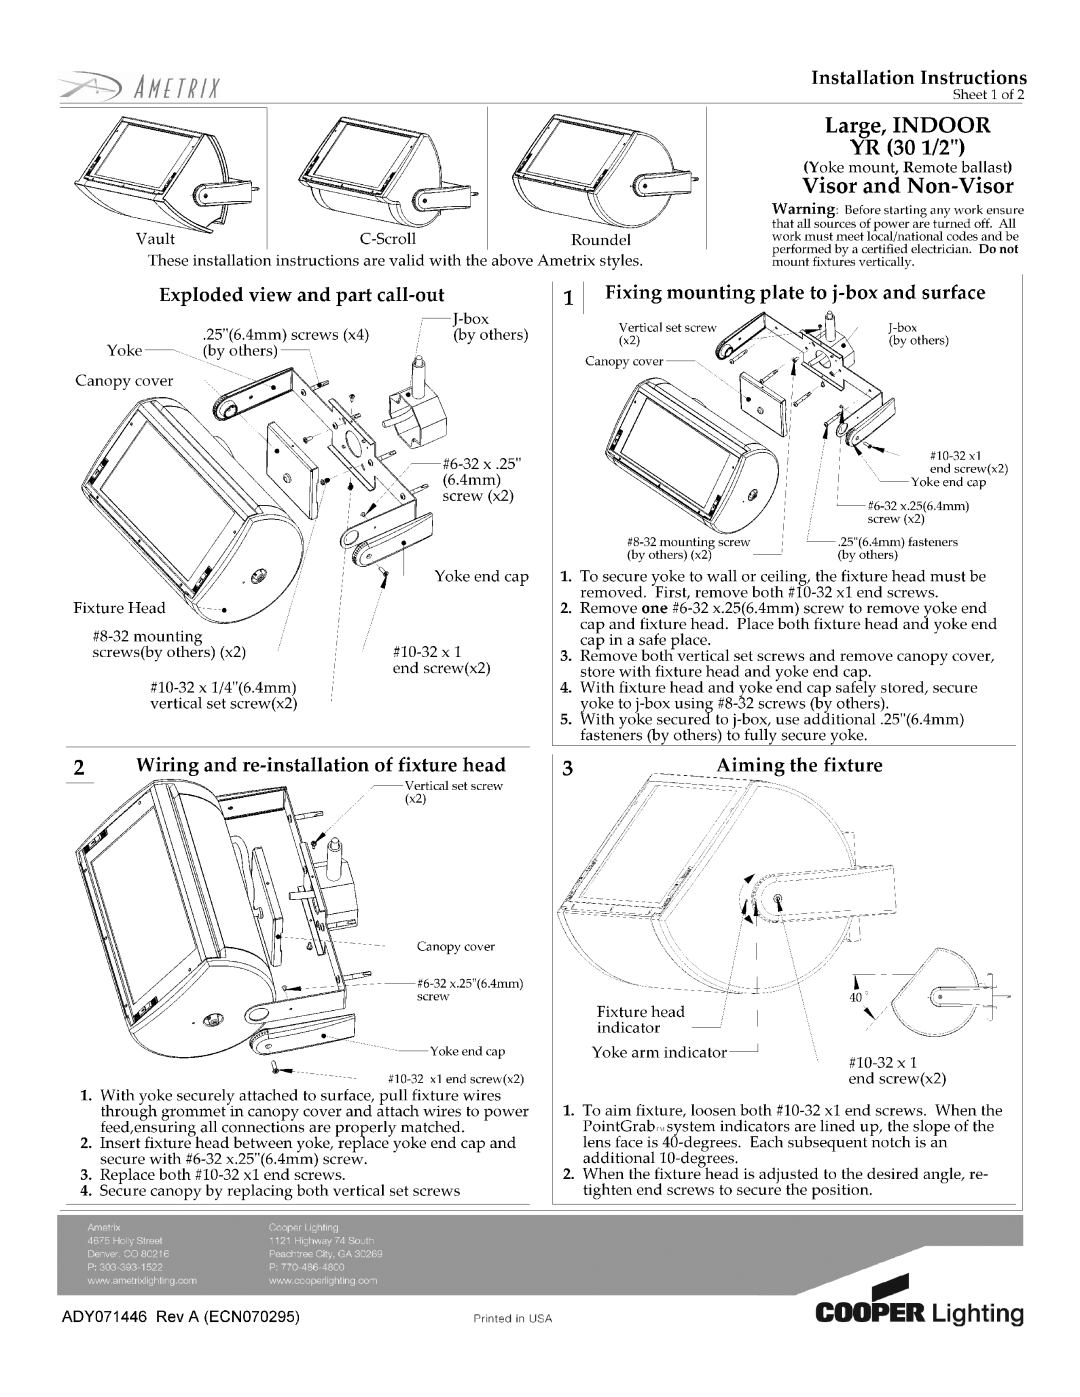 Cooper Lighting YR manual 